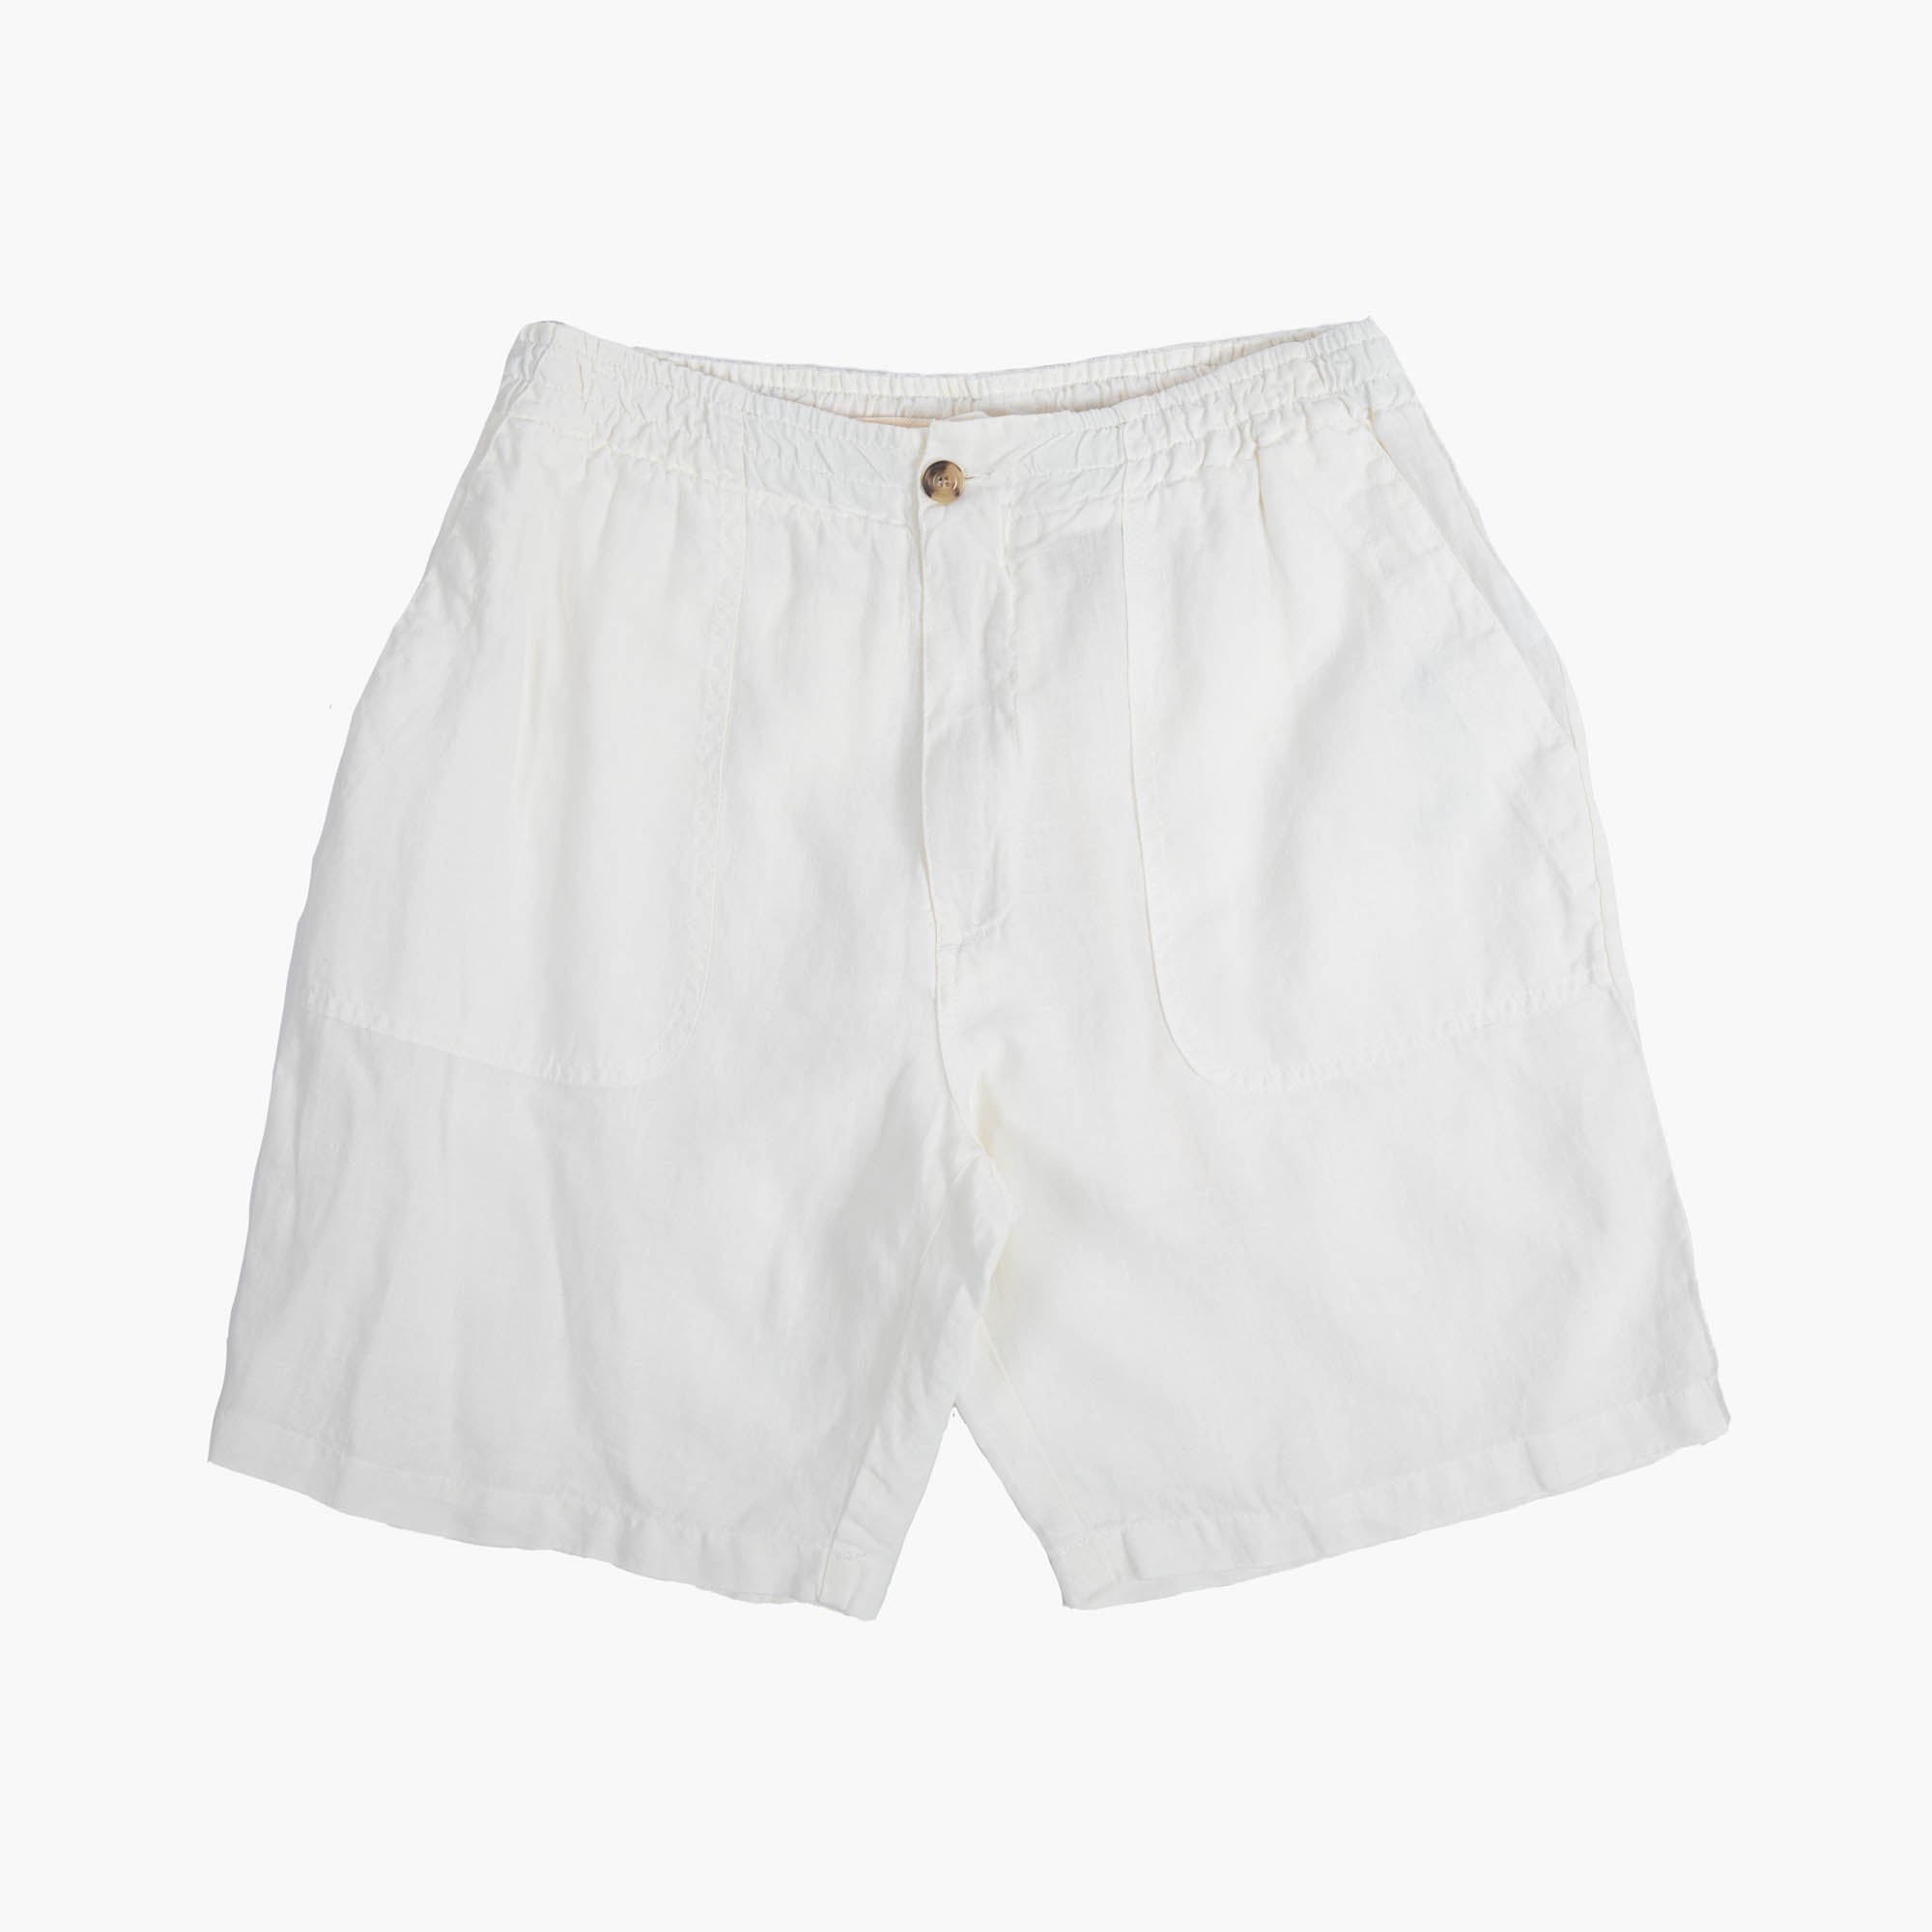 Bermuda Lino Shorts